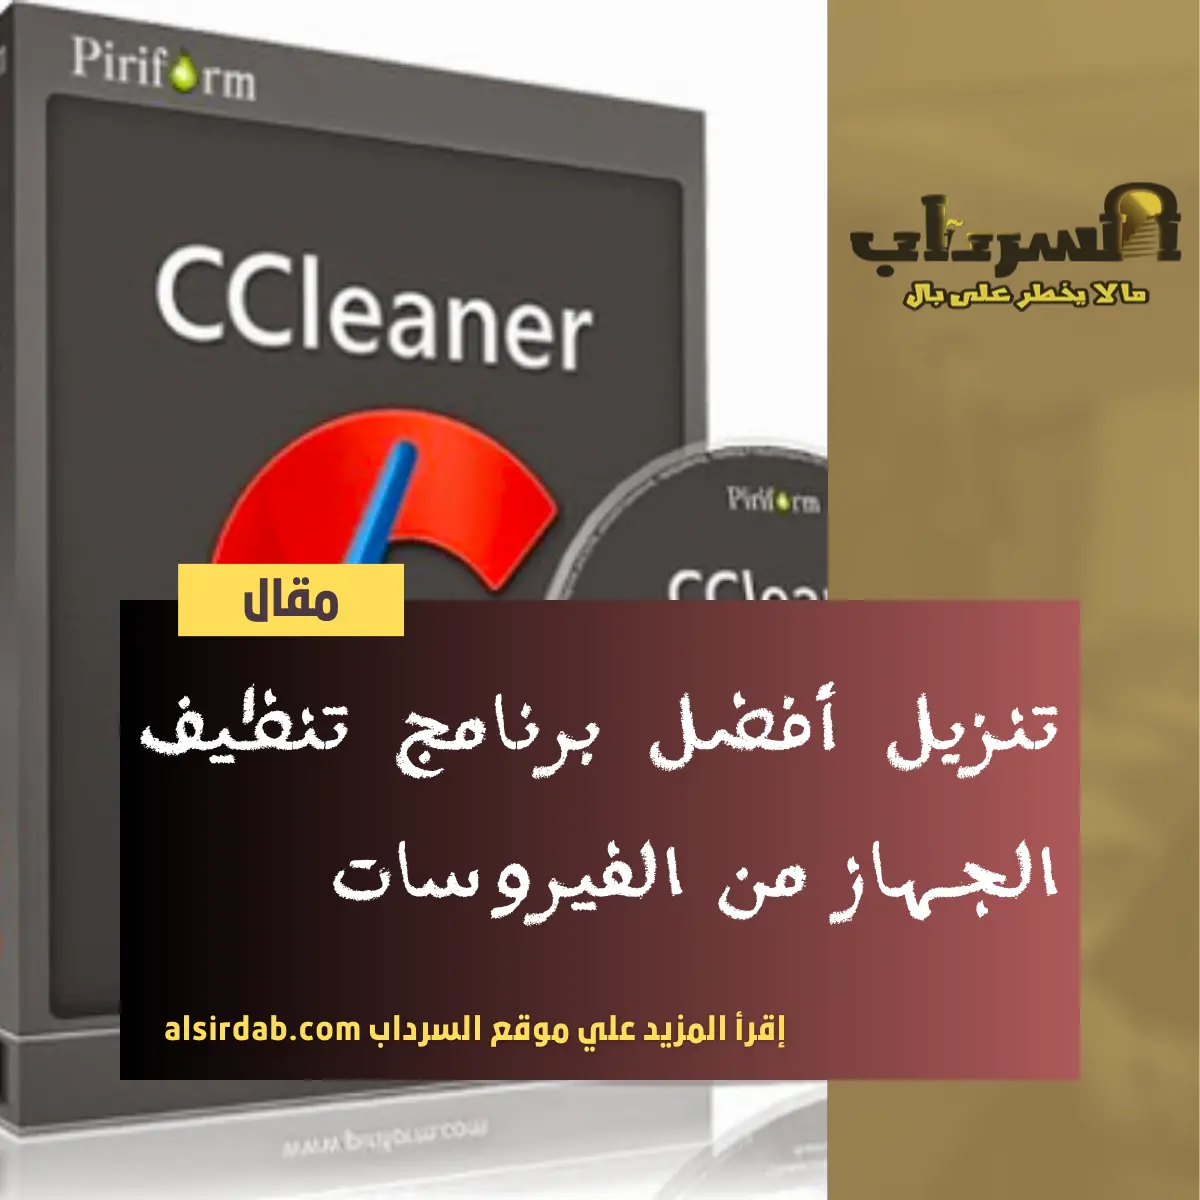 ccleaner تنزيل أفضل برنامج تنظيف الجهاز من الفيروسات